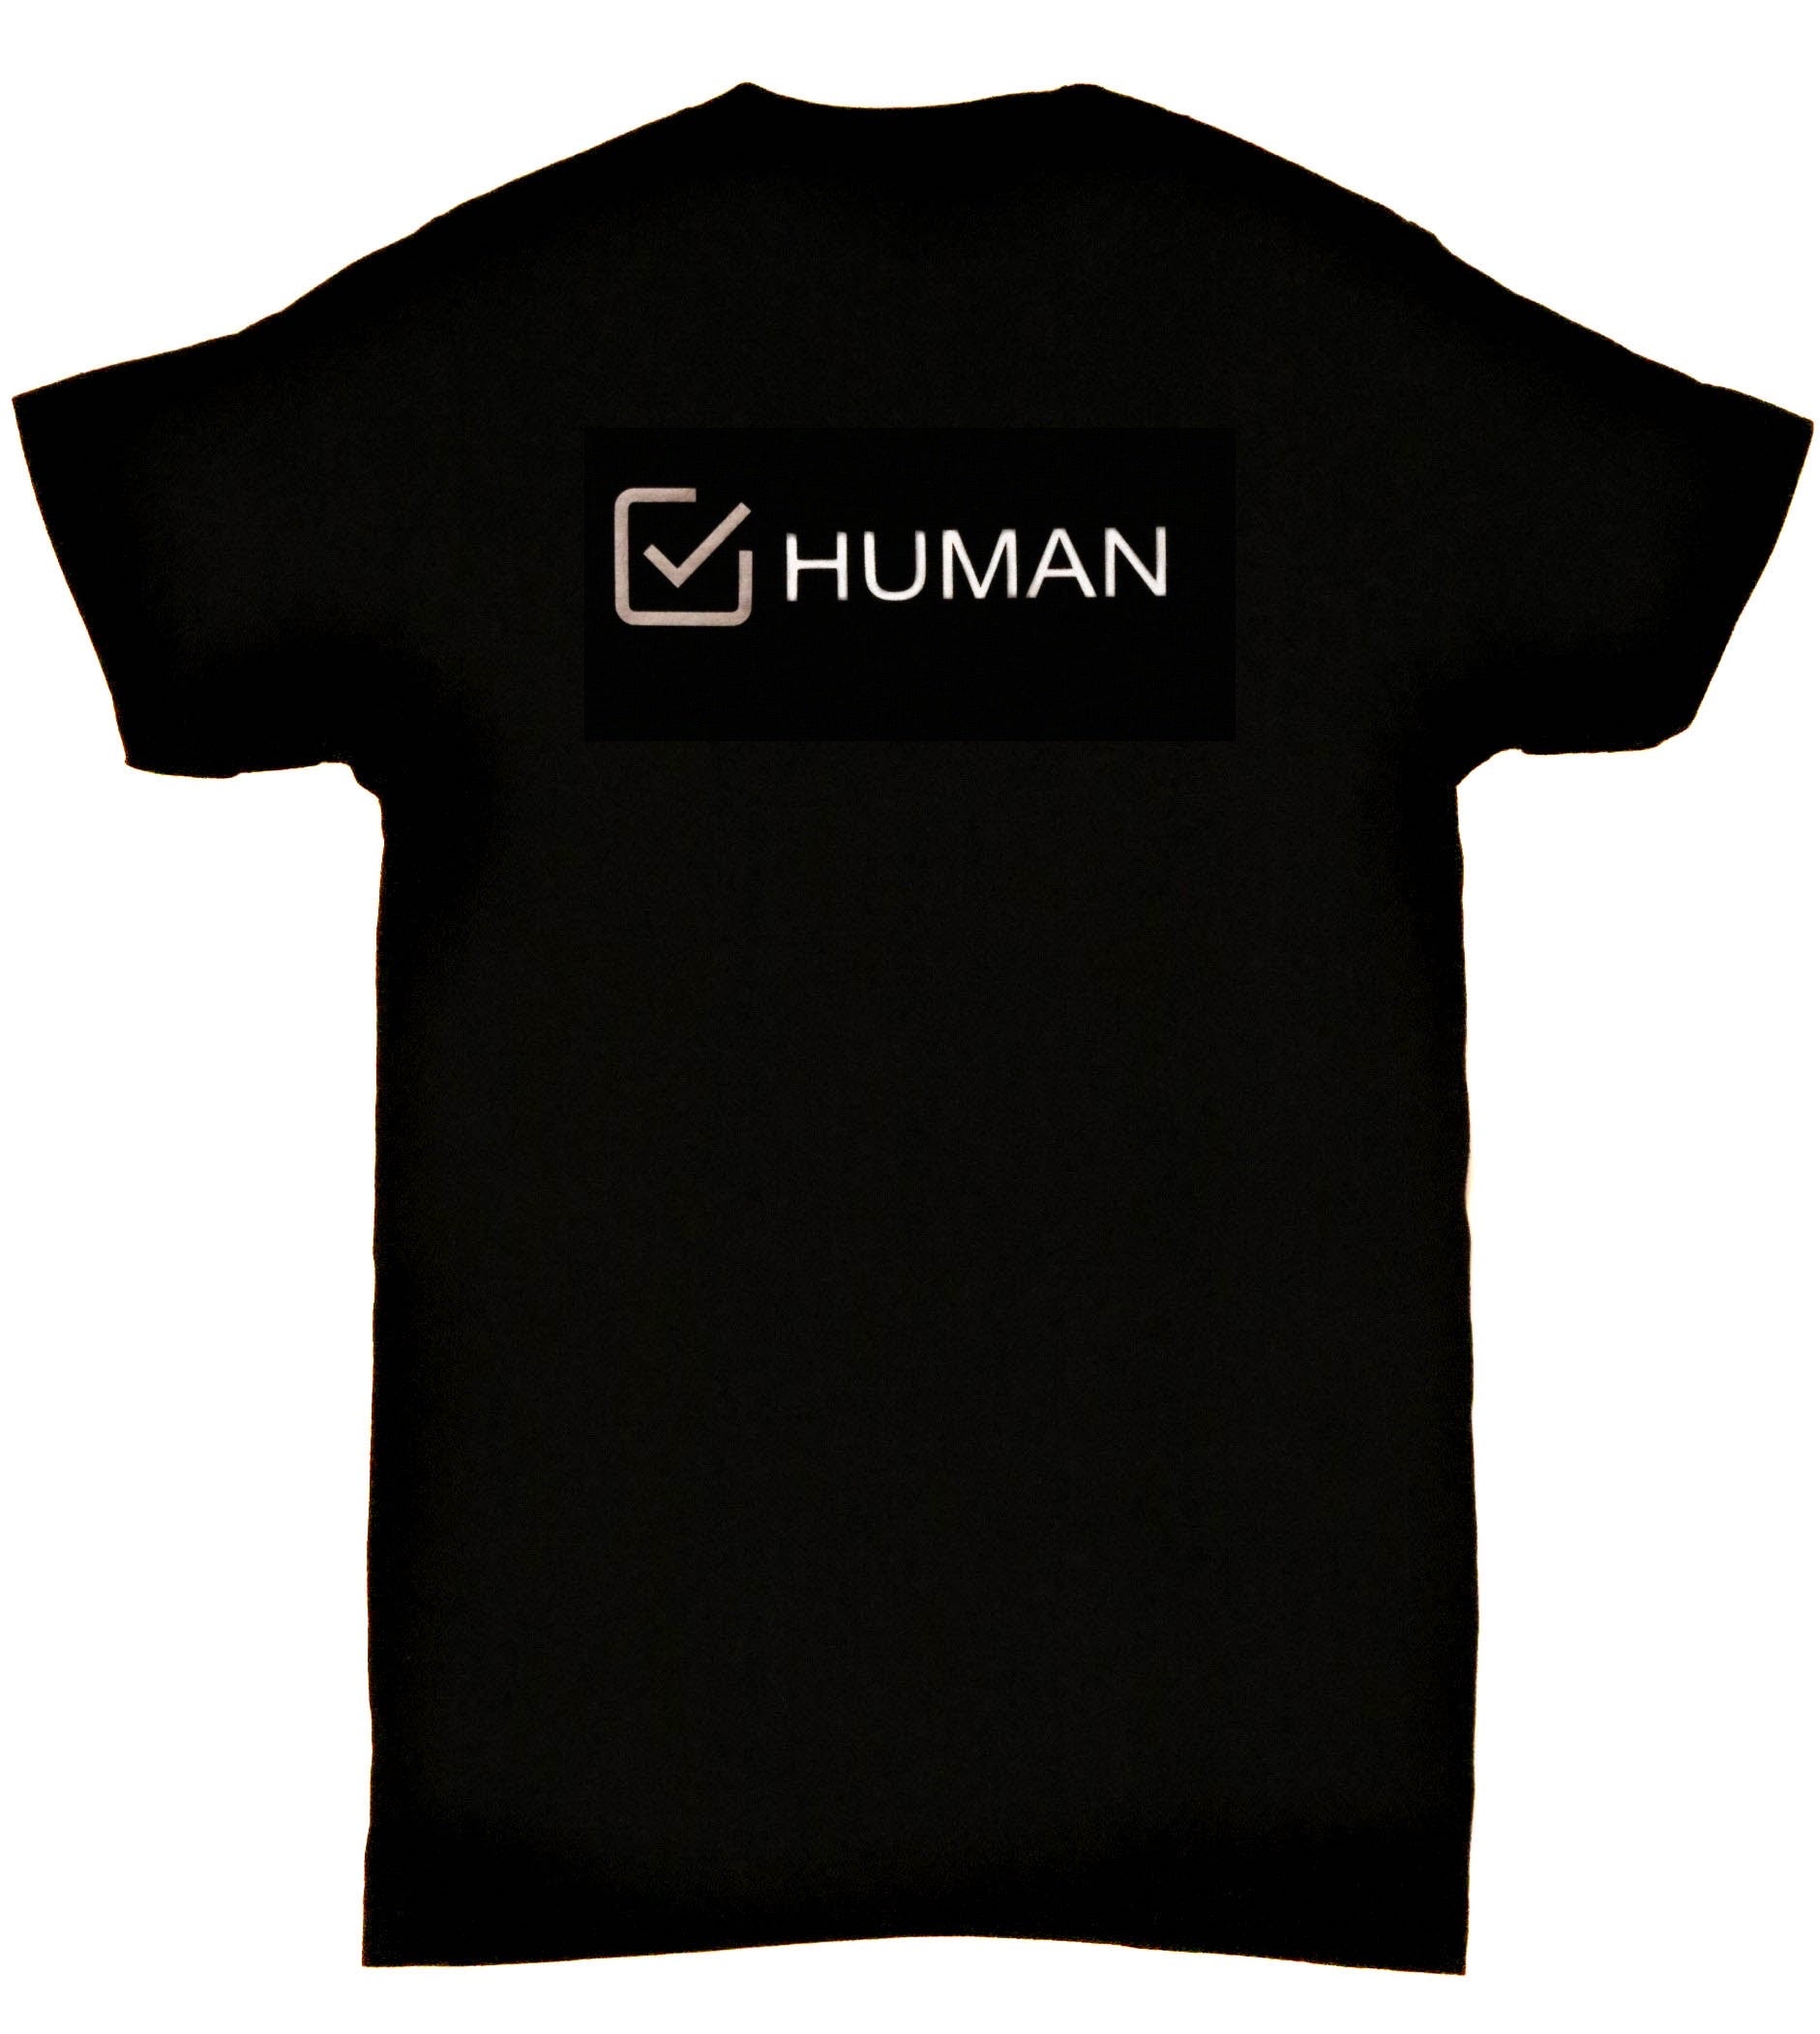 Human T shirt